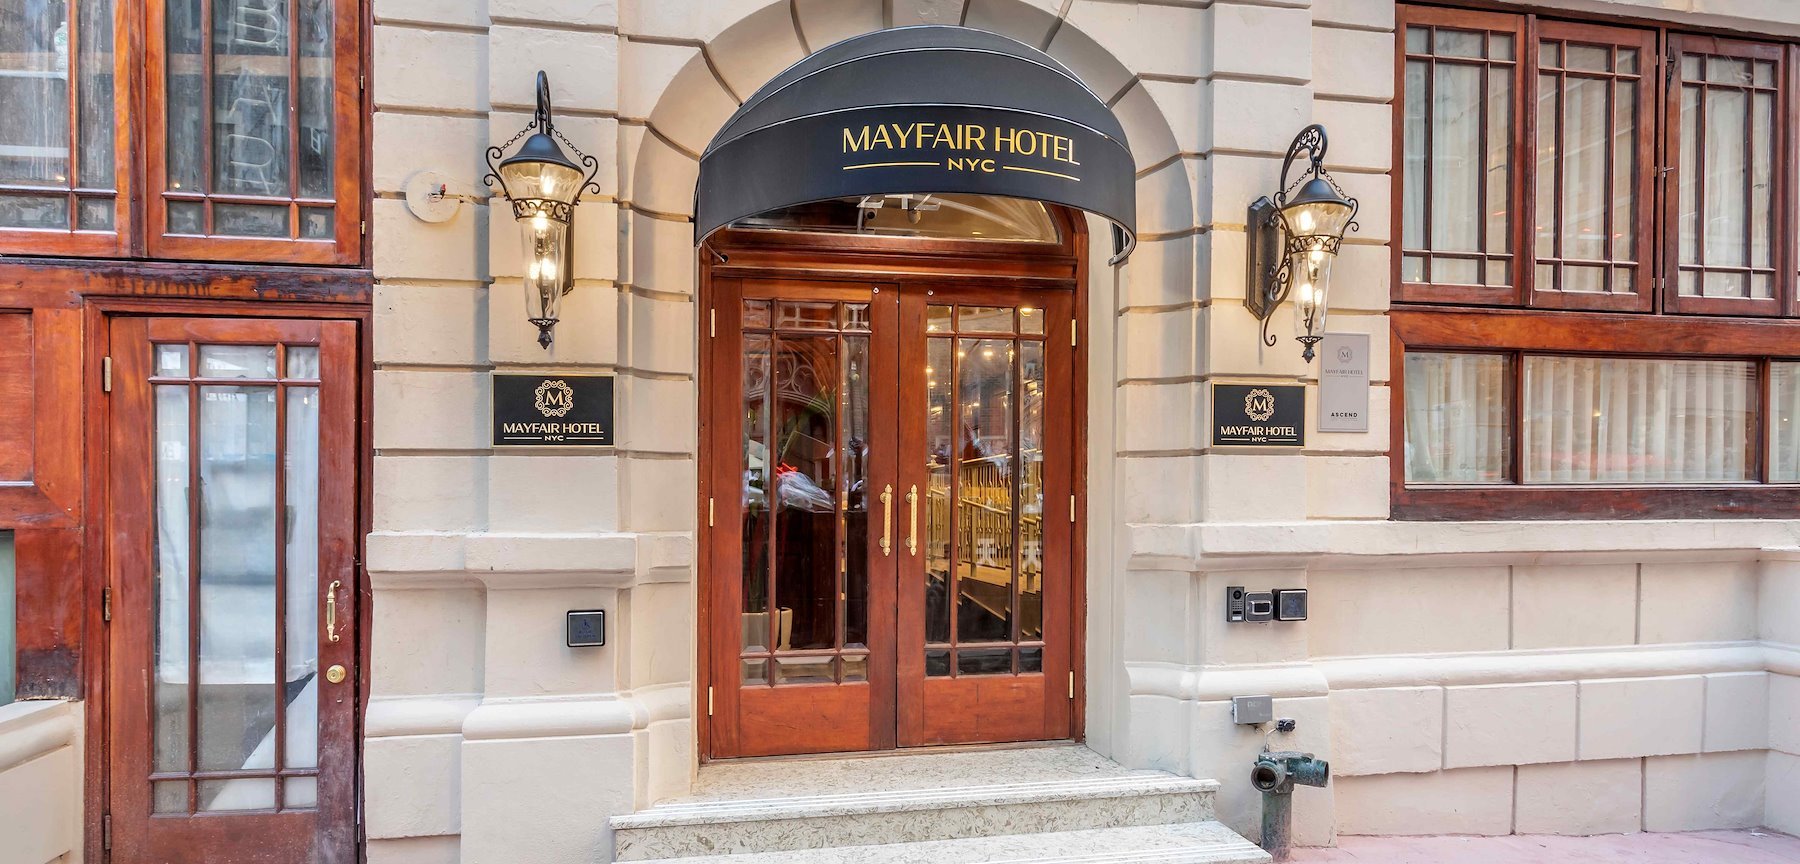 Mayfair Hotel NYC